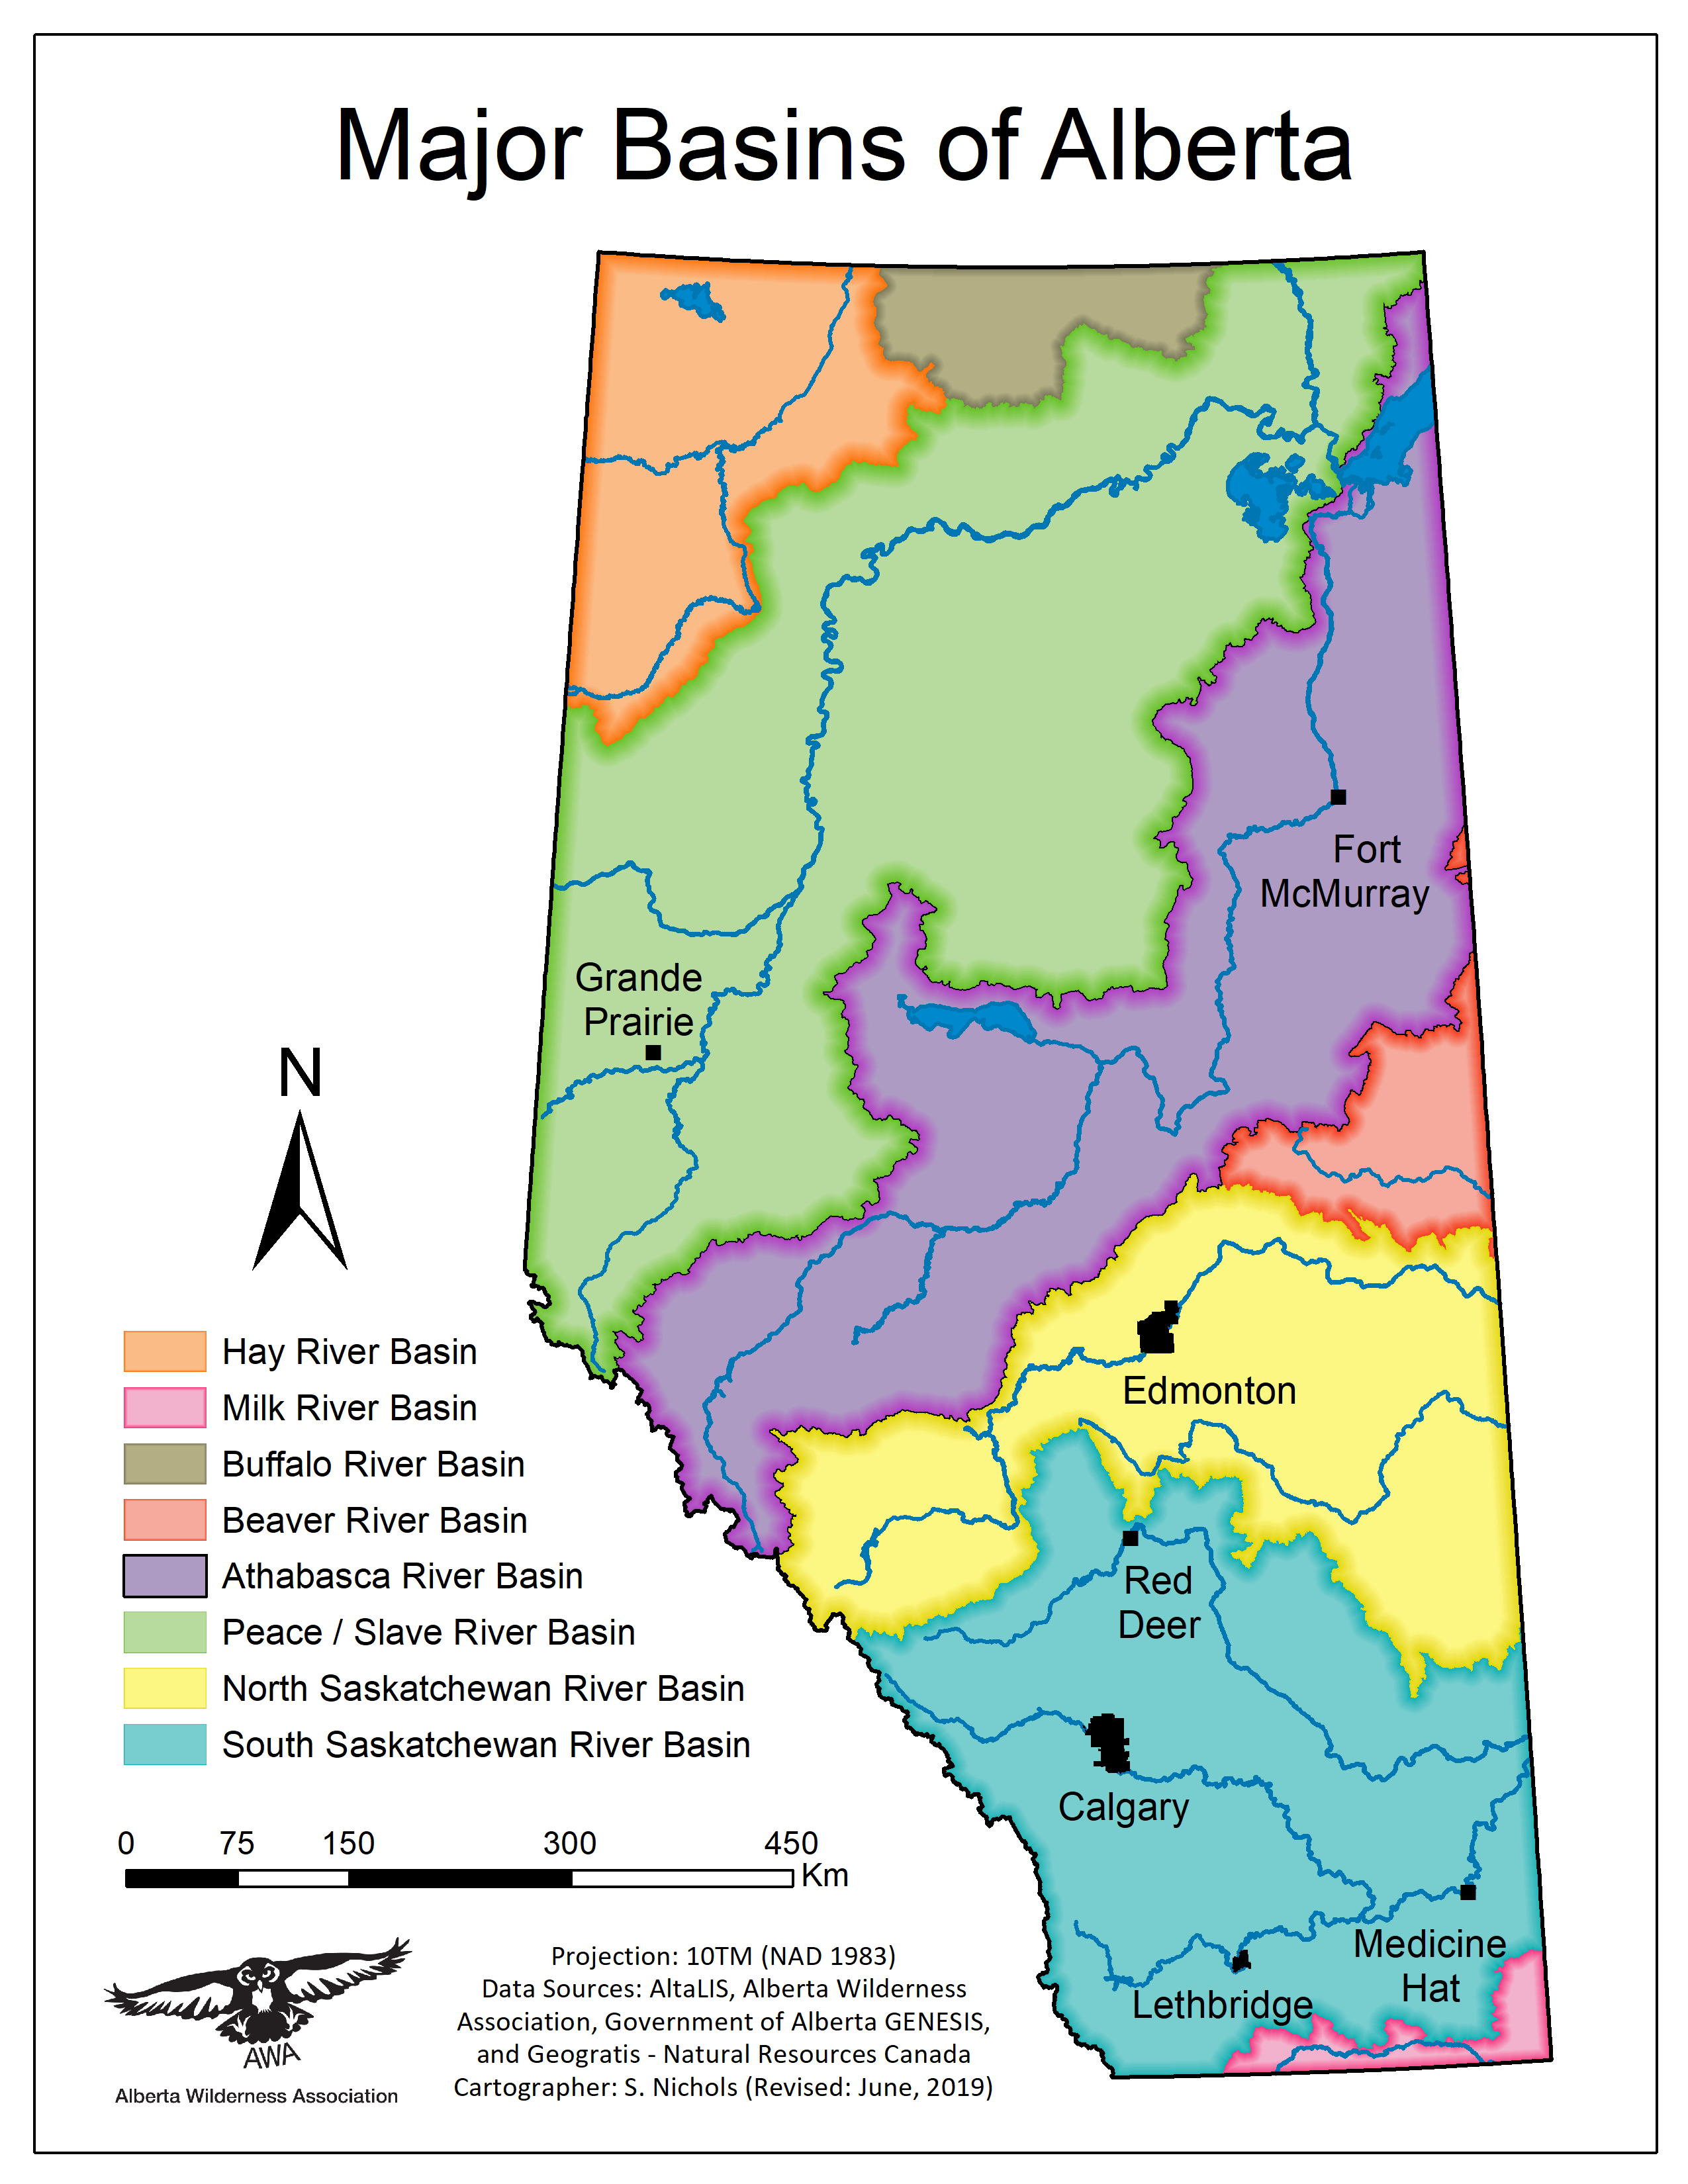 Headwaters - Alberta Wilderness Association